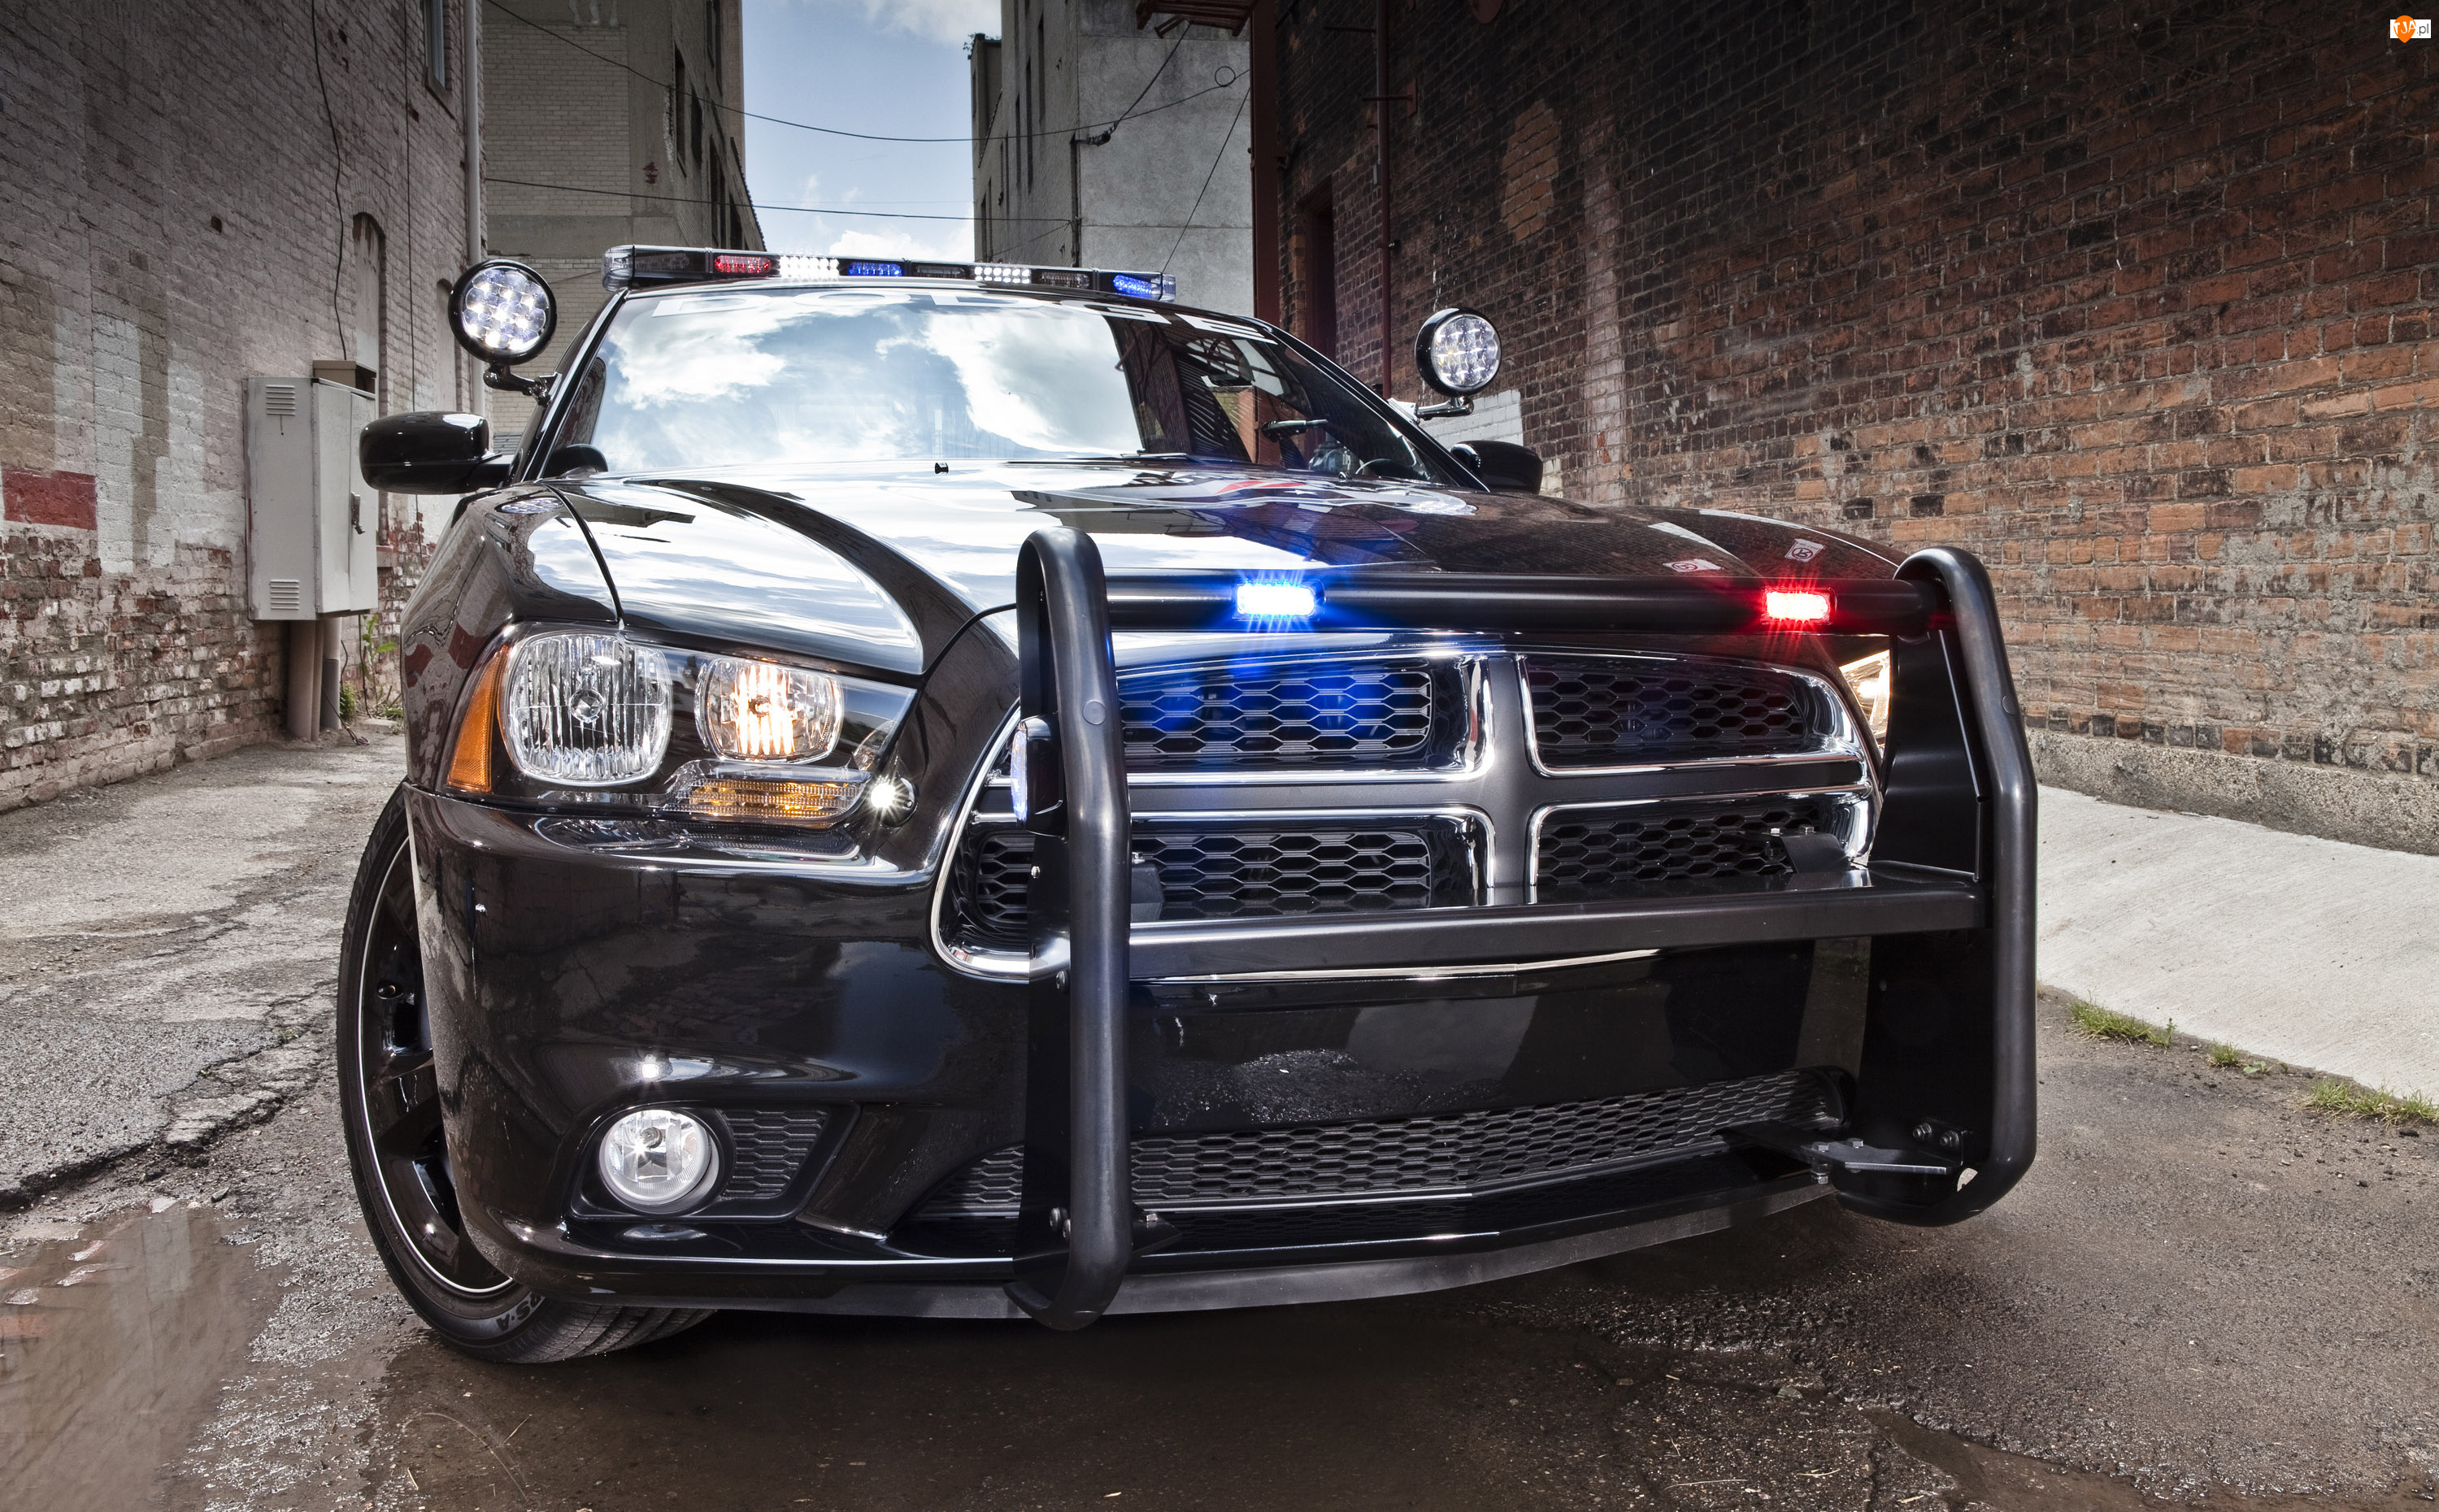 2014, Samochód, Policyjny, Dodge Charger Pursuit